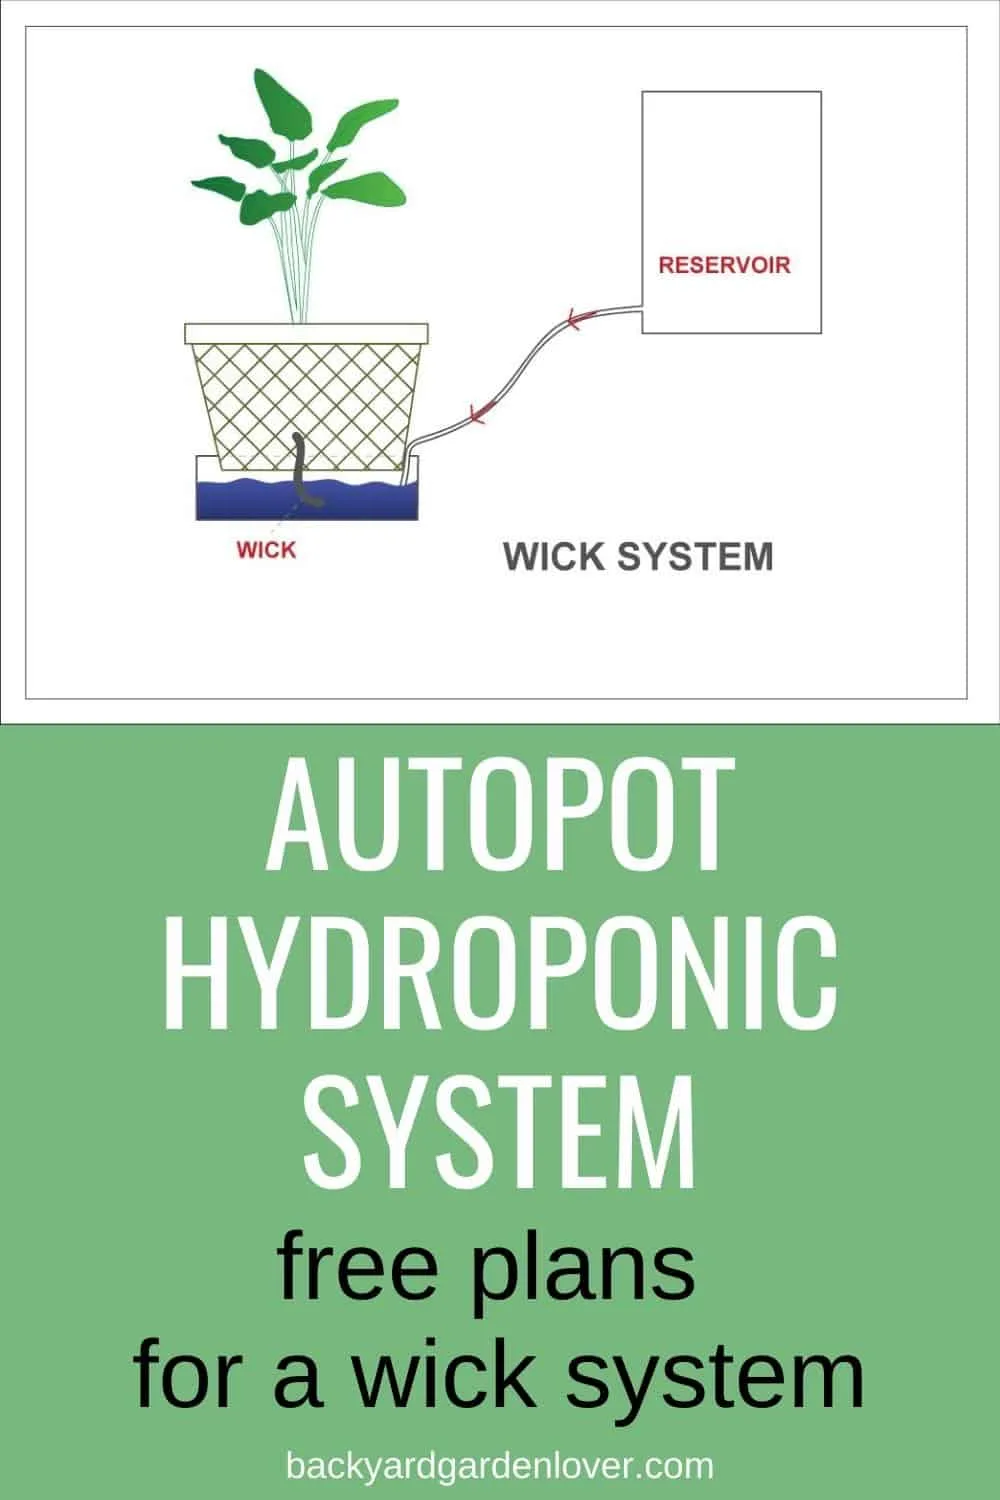 Autopot hydroponics system - Pinterest image